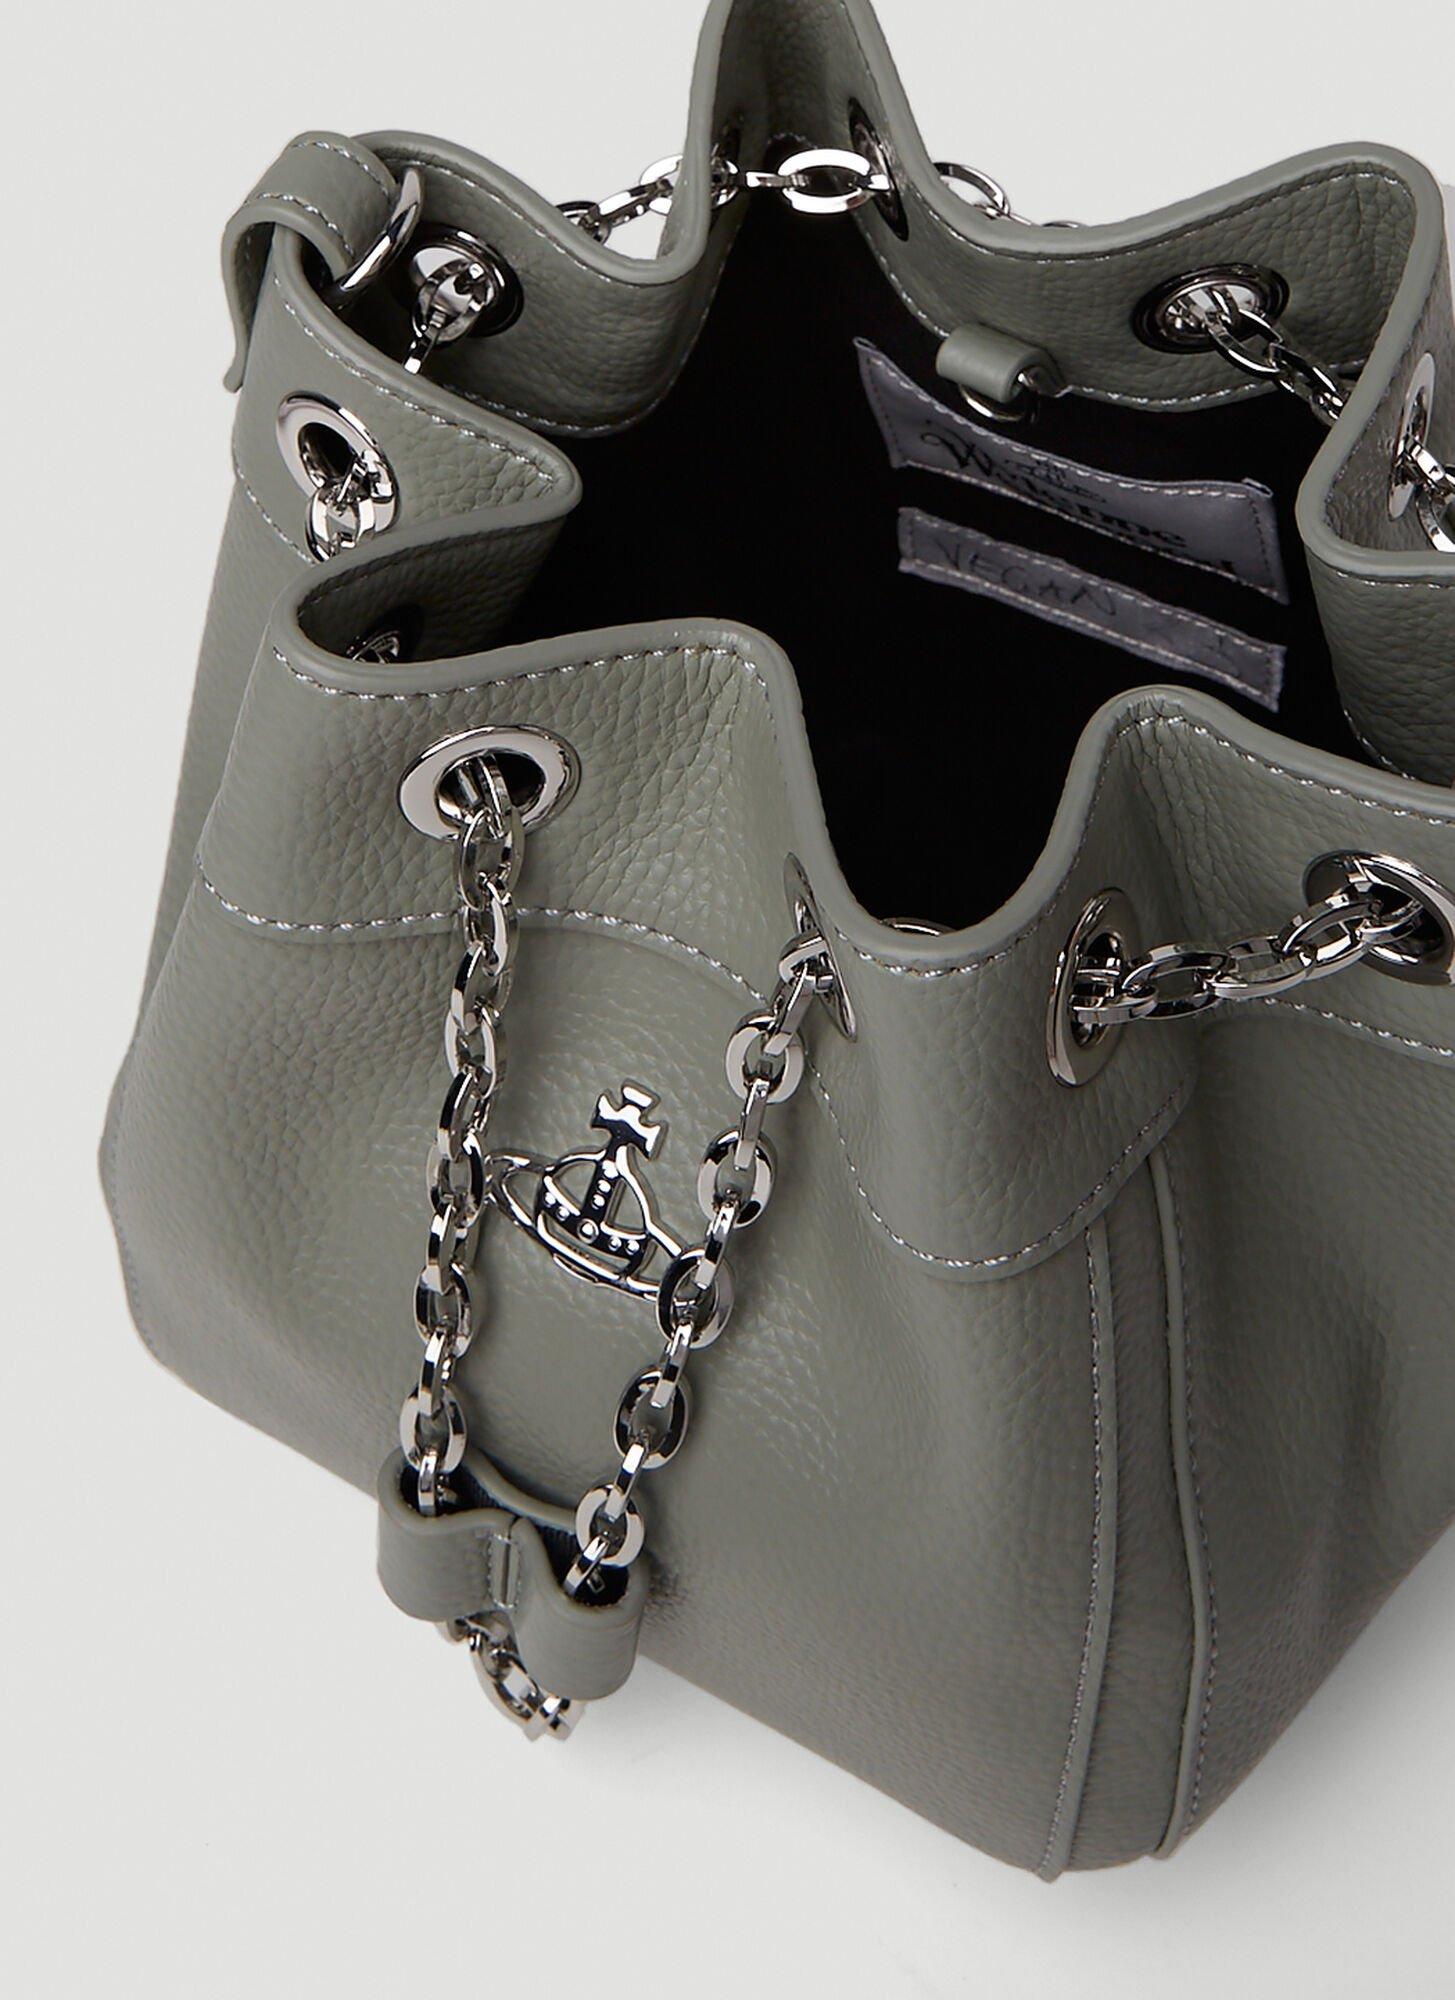 Vivienne Westwood Chrissy Small Bucket Handbag in Gray